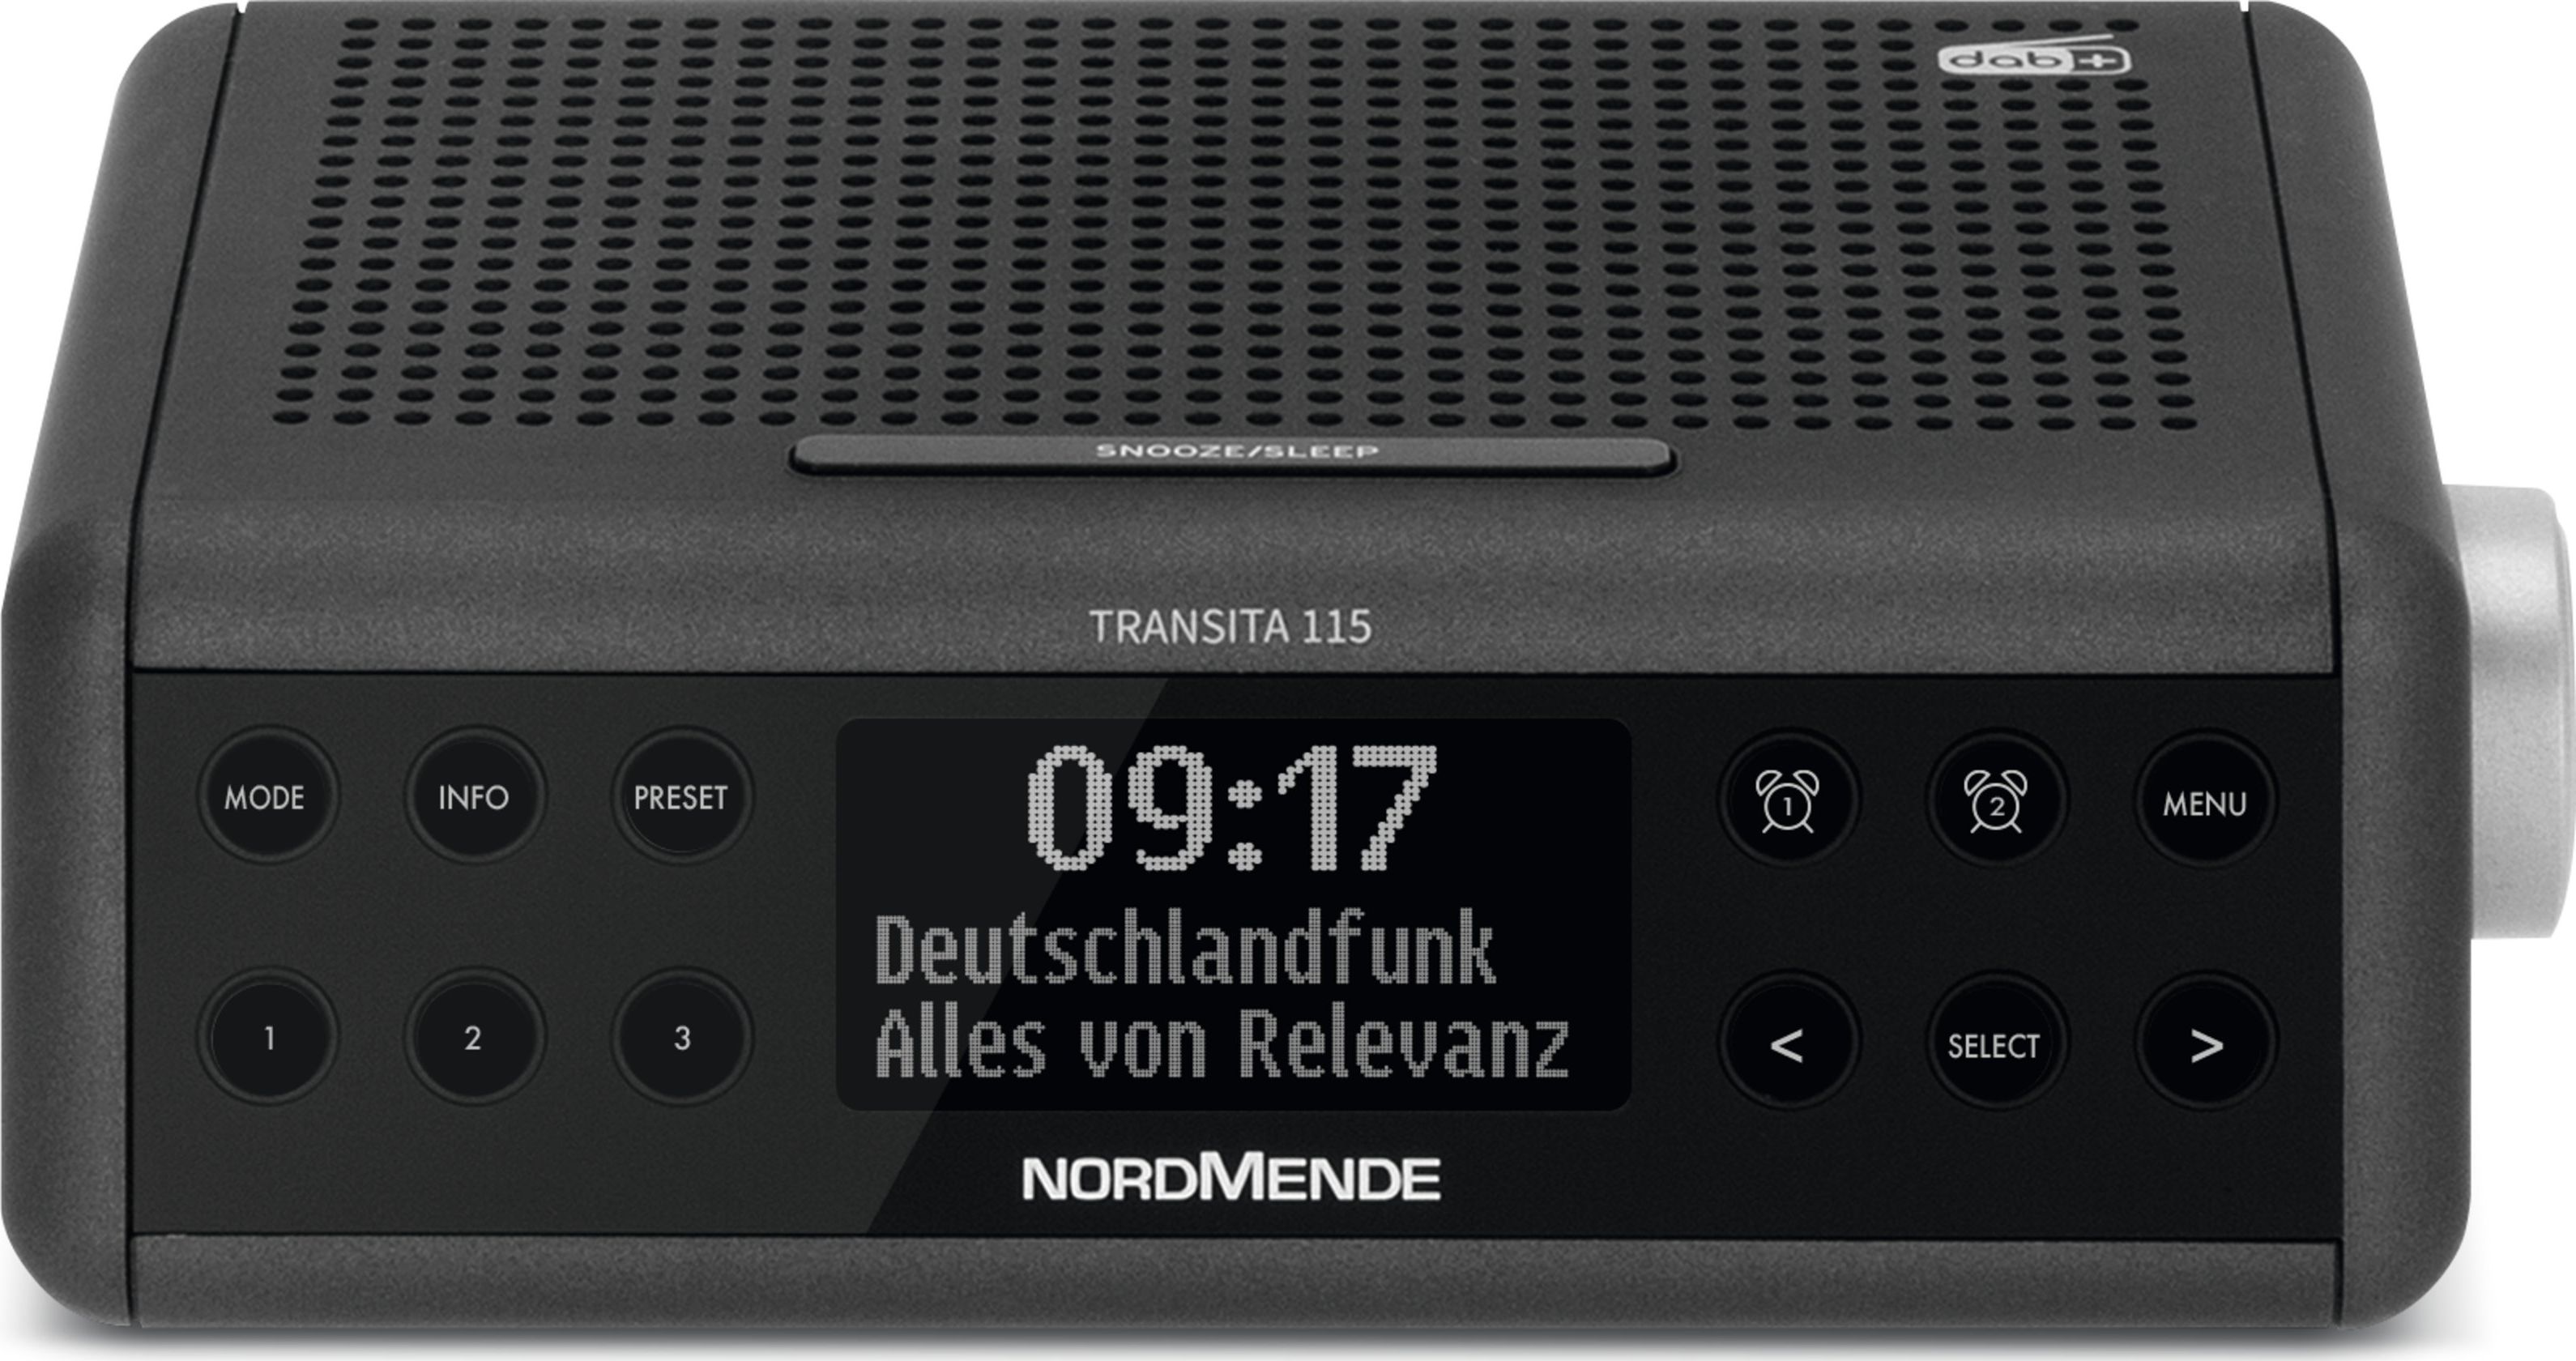 Radio cu ceas, Nordmende, TRANSITA 115, DAB + si FM, Display OLED, Functie snooze, 3 W, Negru